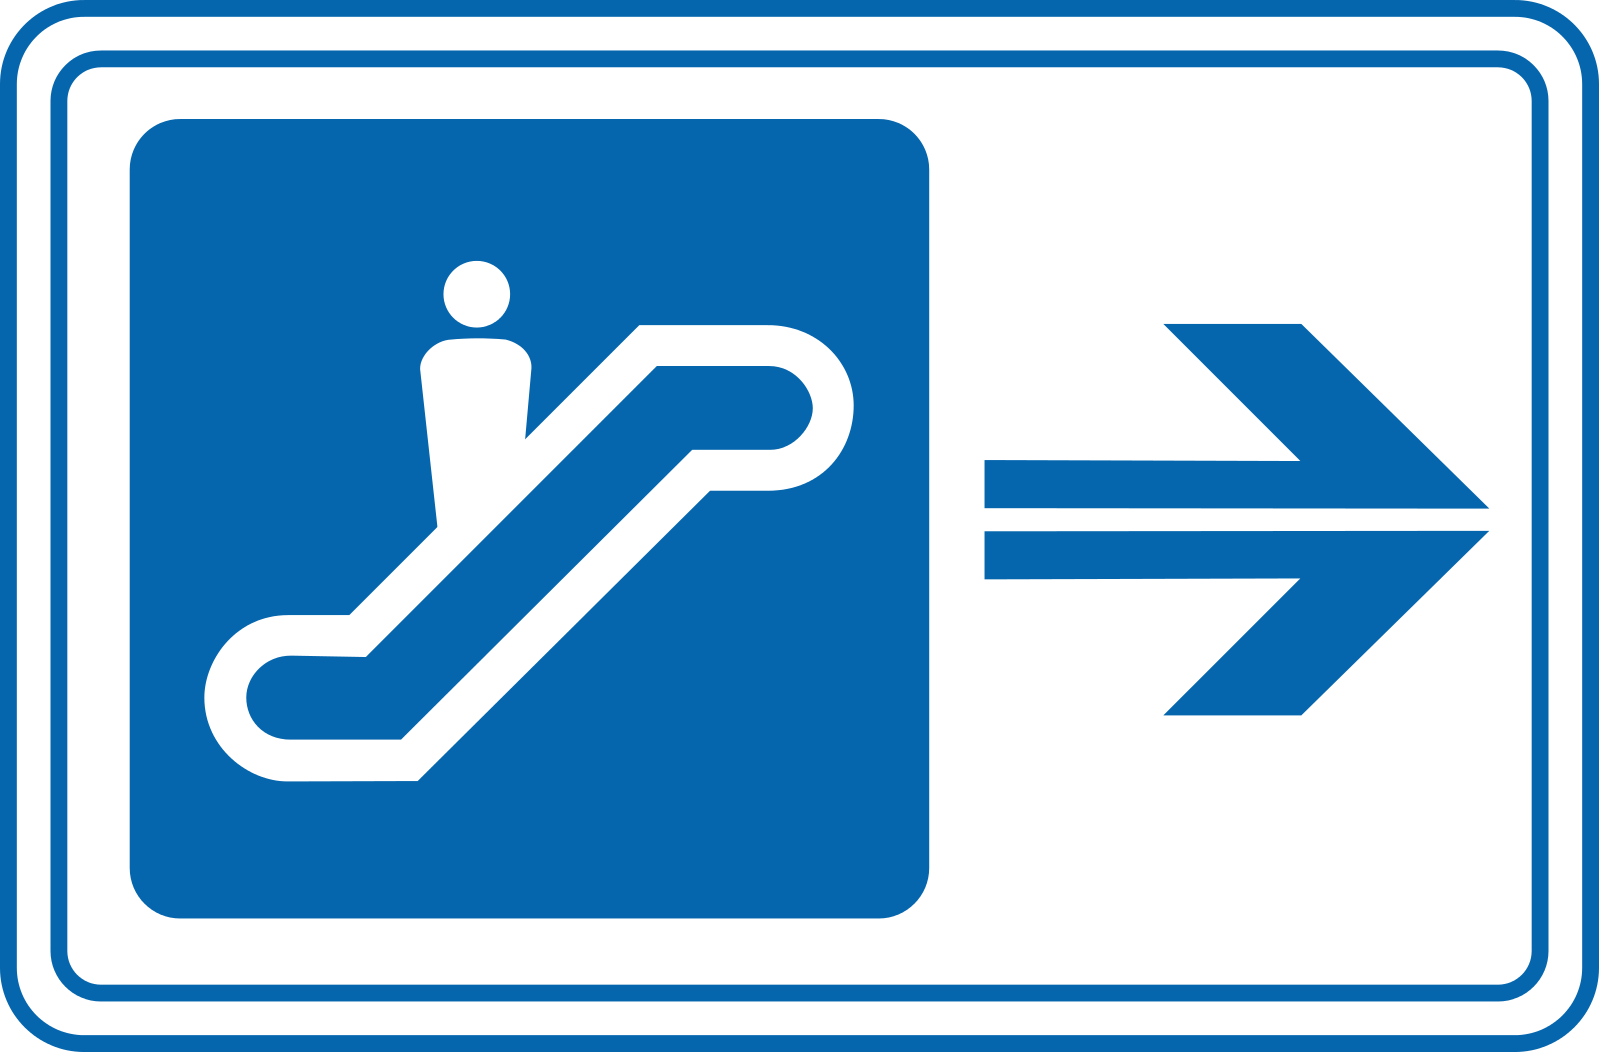 Таблички на эскалатор. Значок эскалатора. Пиктограмма эскалатор. Знаки безопасности на эскалаторе. Знаки в метрополитене 4 класс окружающий мир